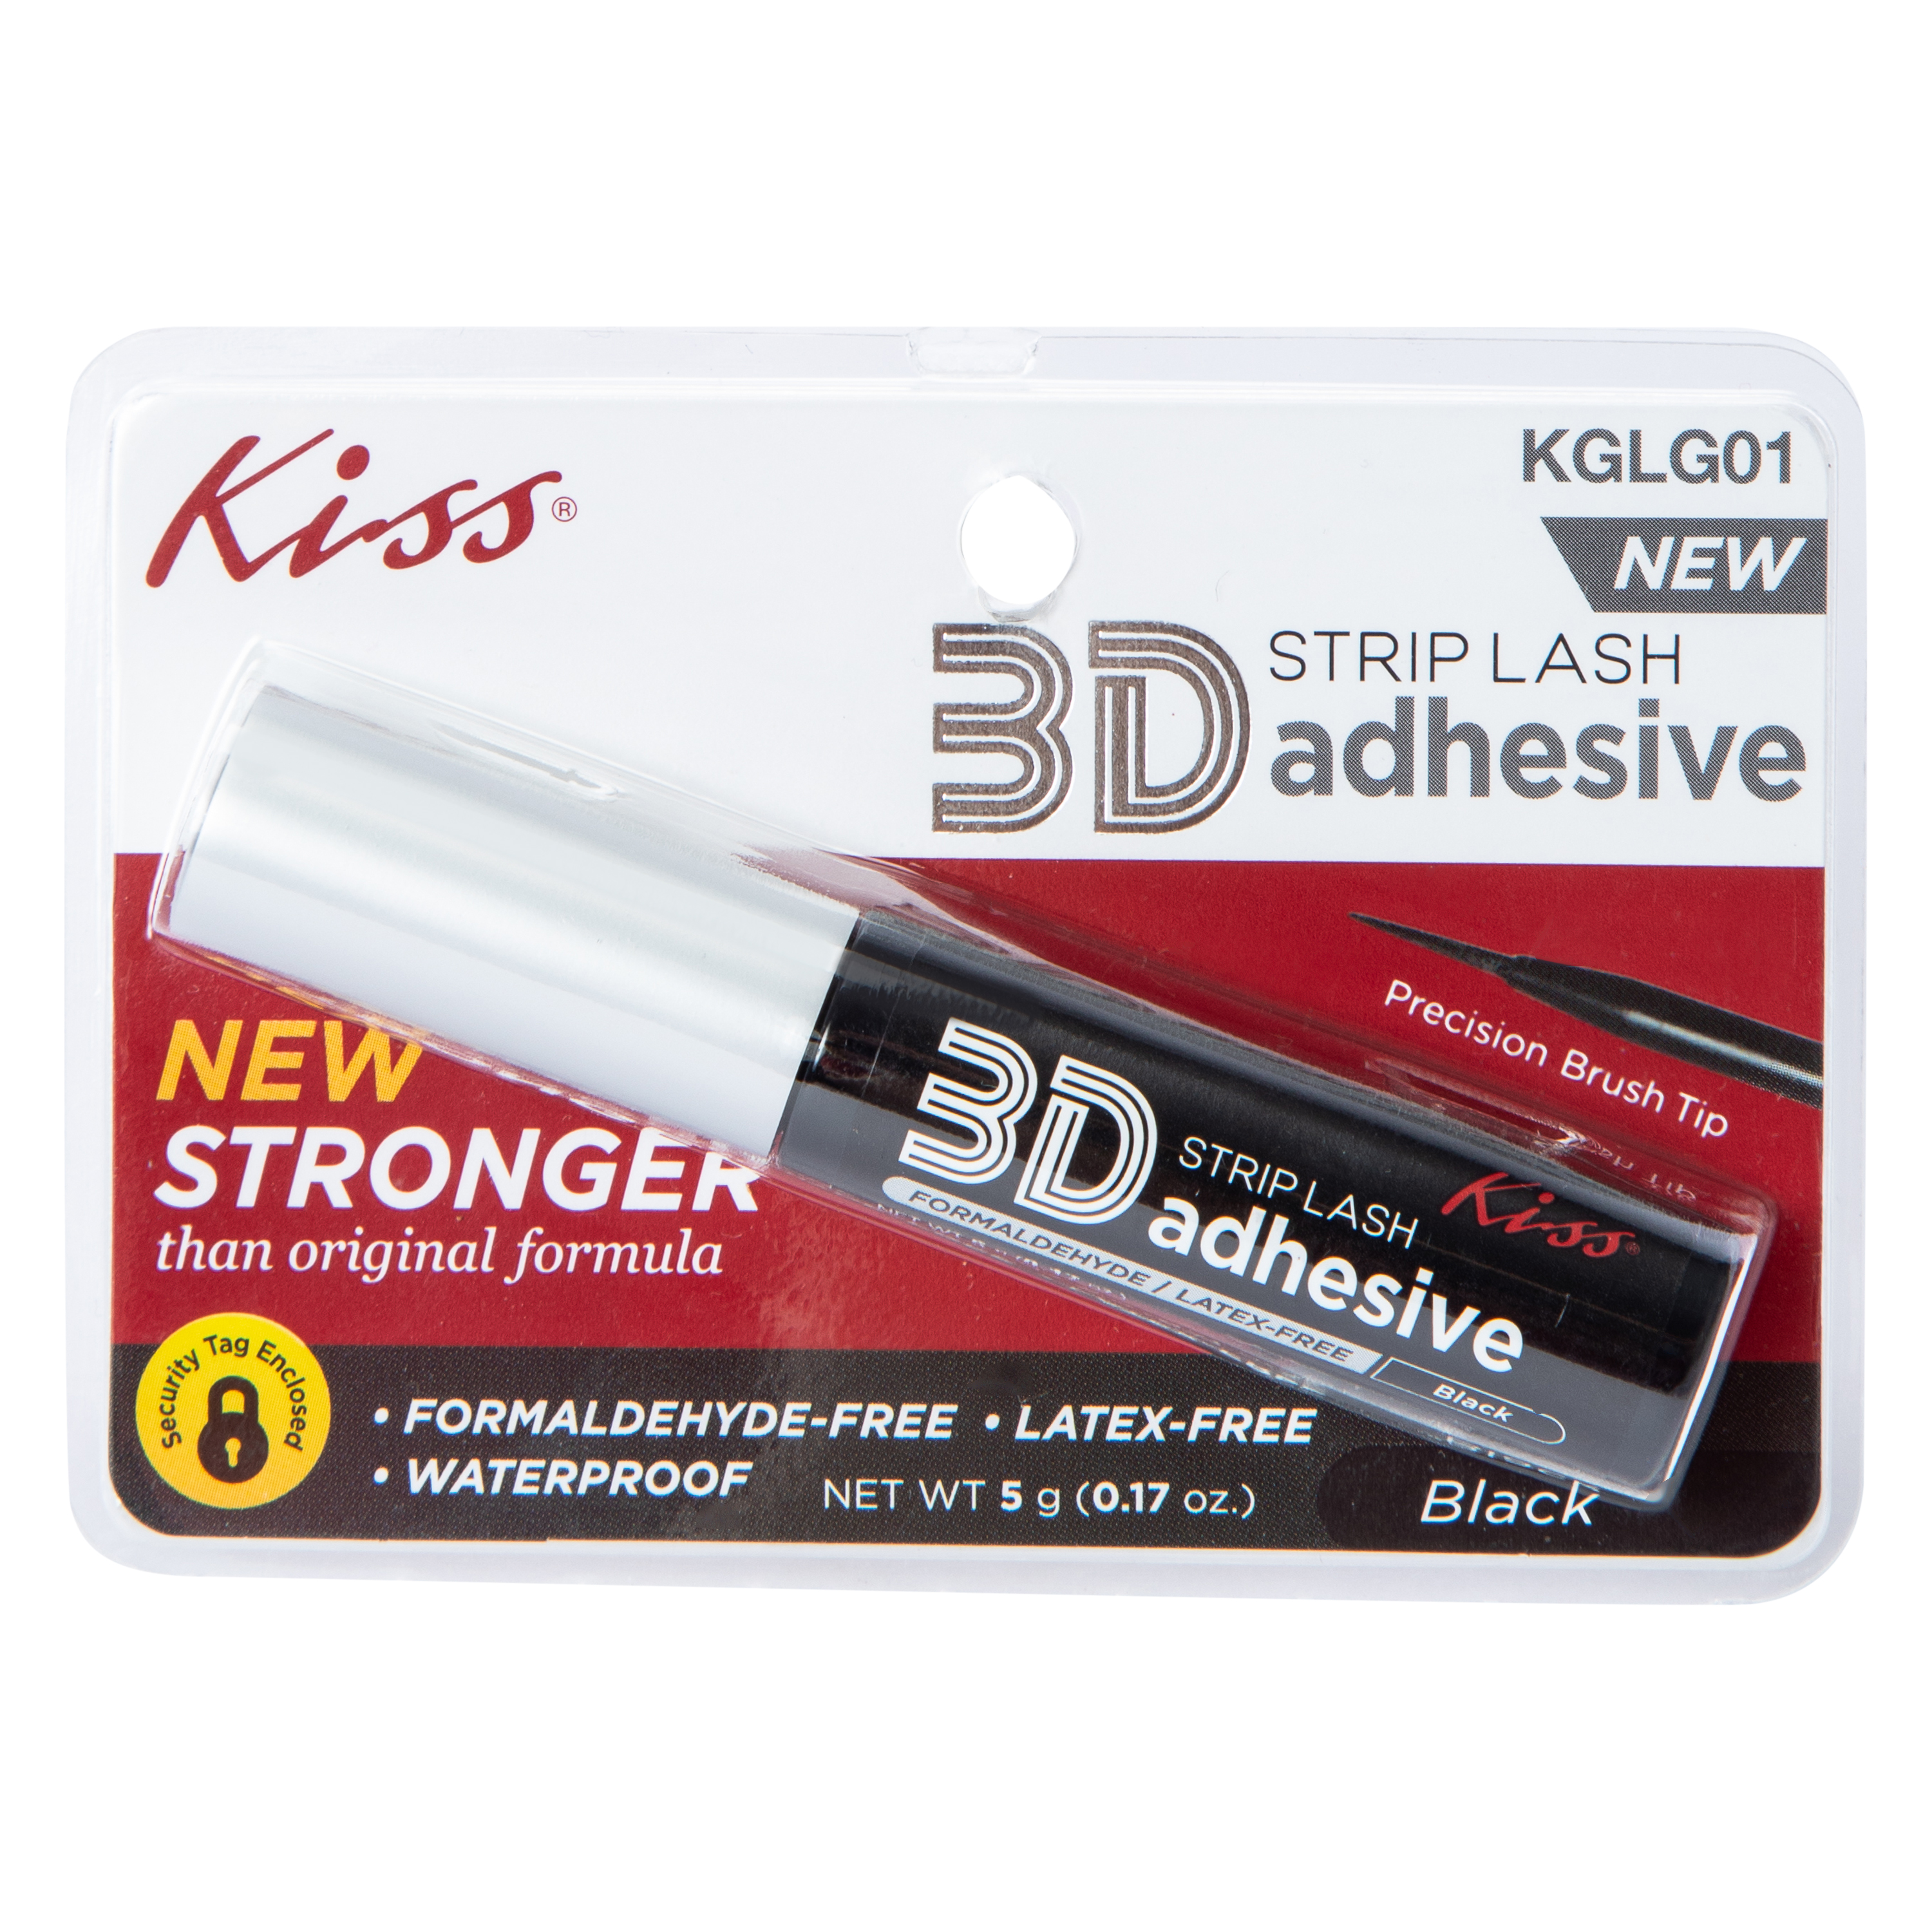 Kiss® 3D Strip Lash Adhesive